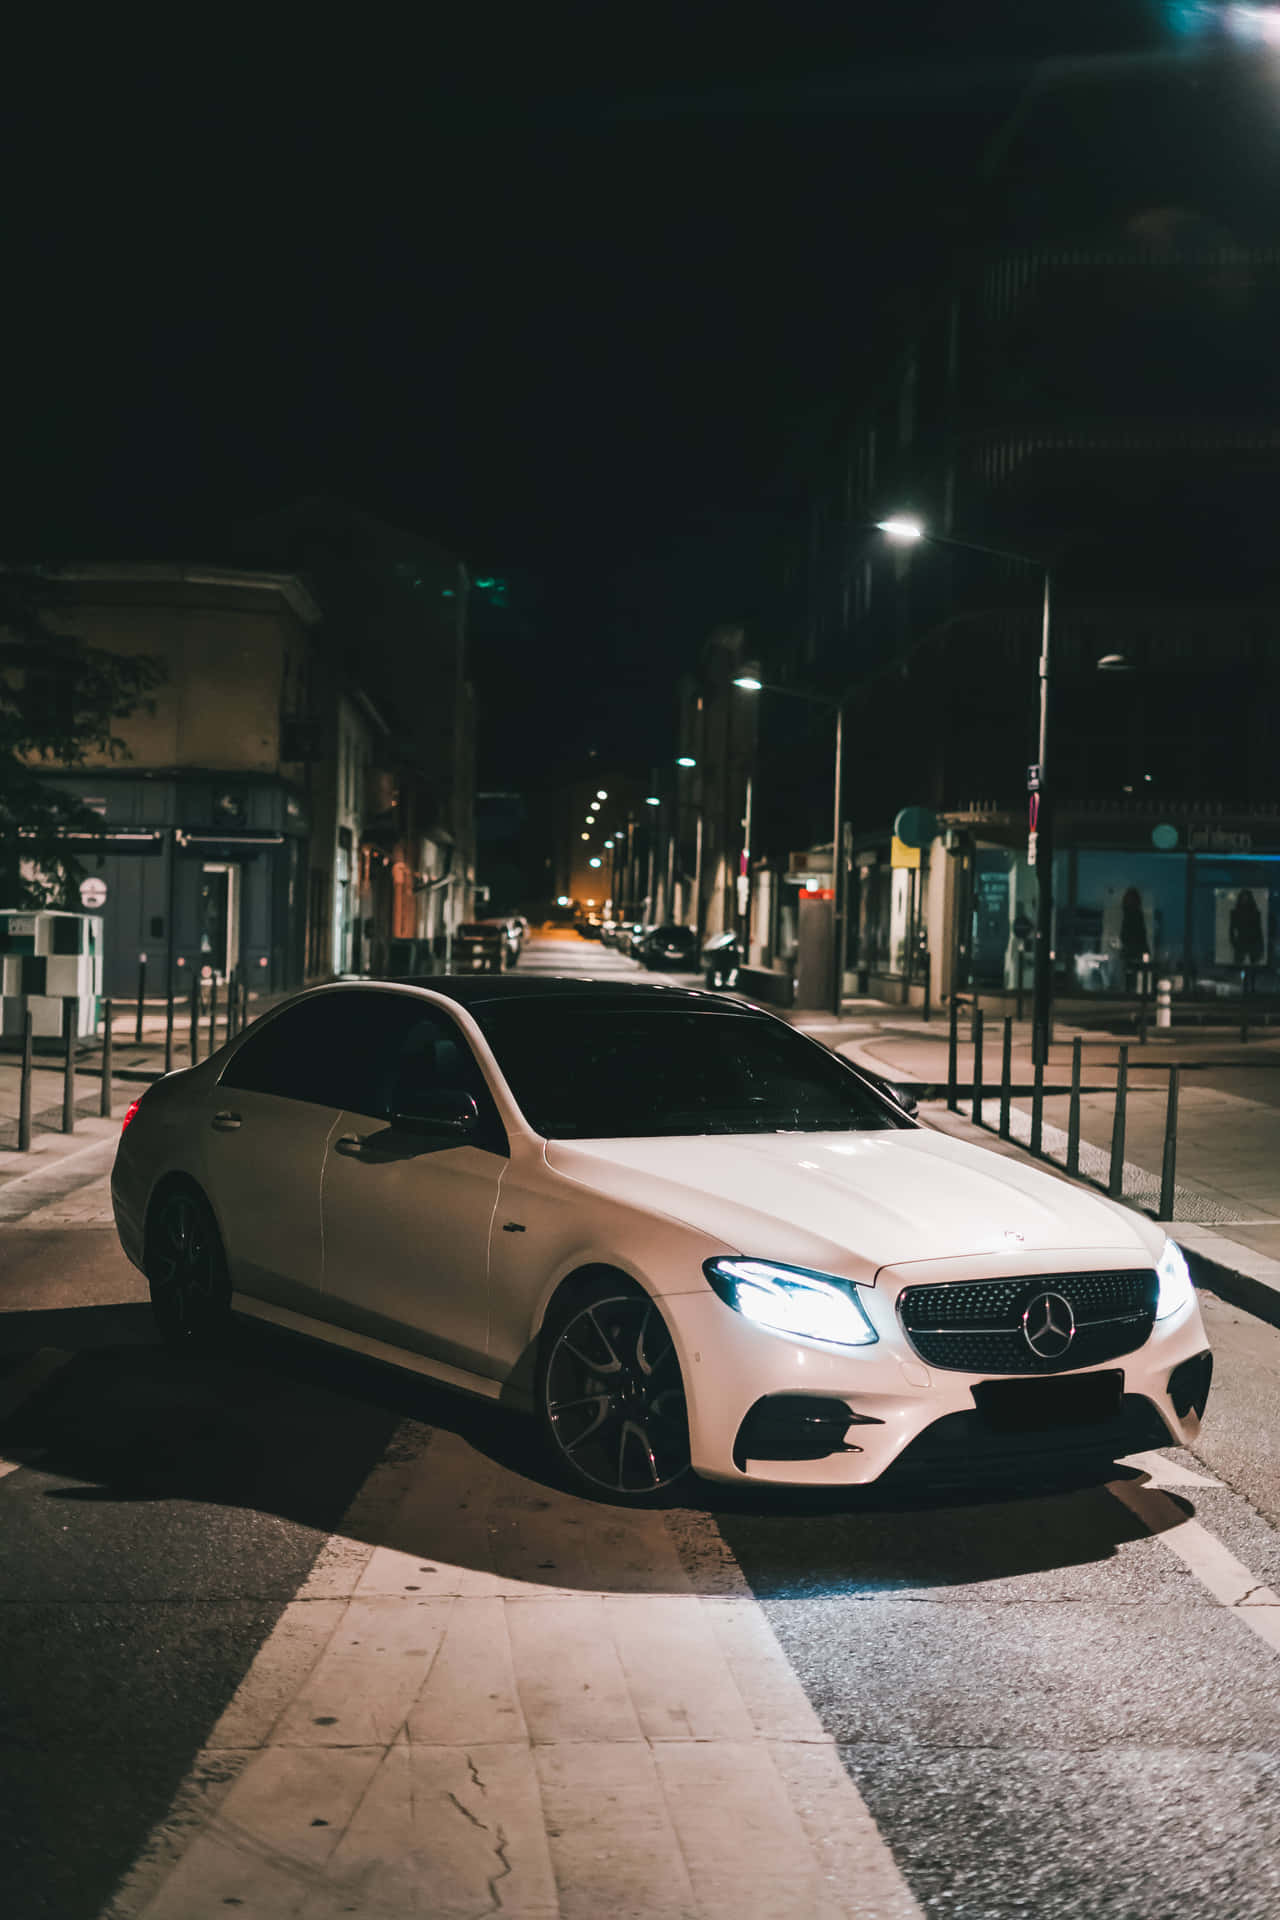 Mercedes Benz Clase E At Night Wallpaper